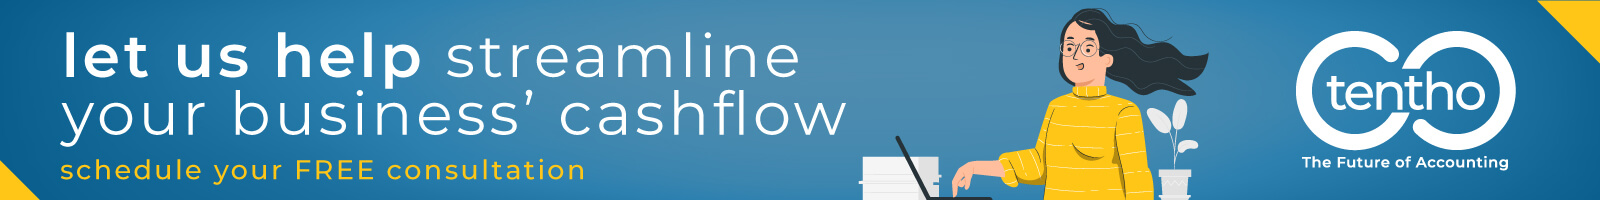 Tentho helps you streamline your business cashflow.